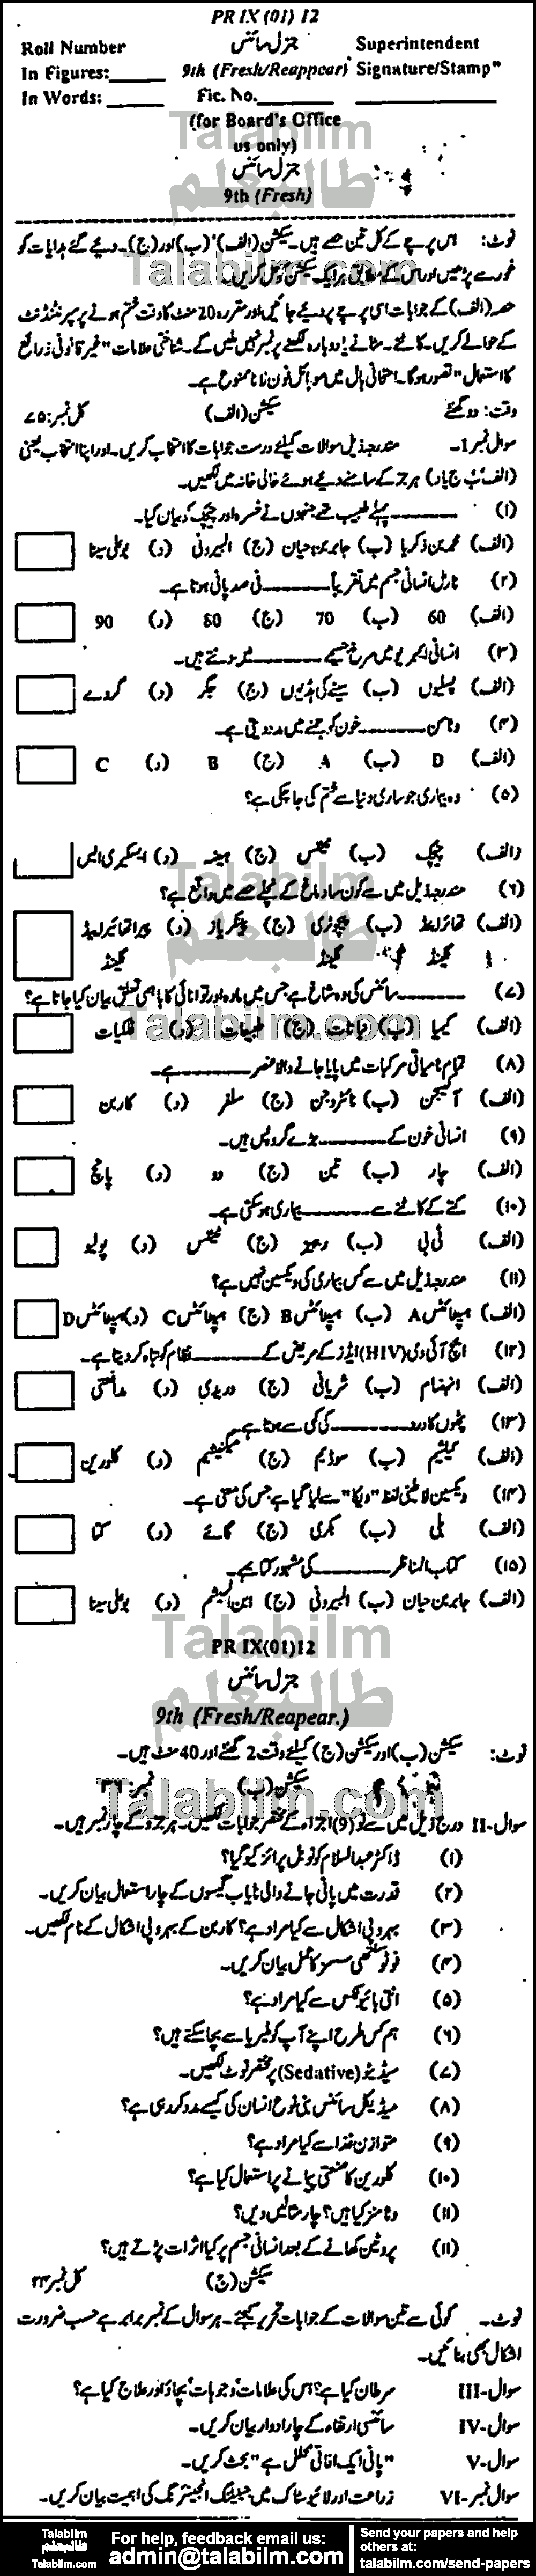 General Science 0 past paper for Urdu Medium 2012 Group-I